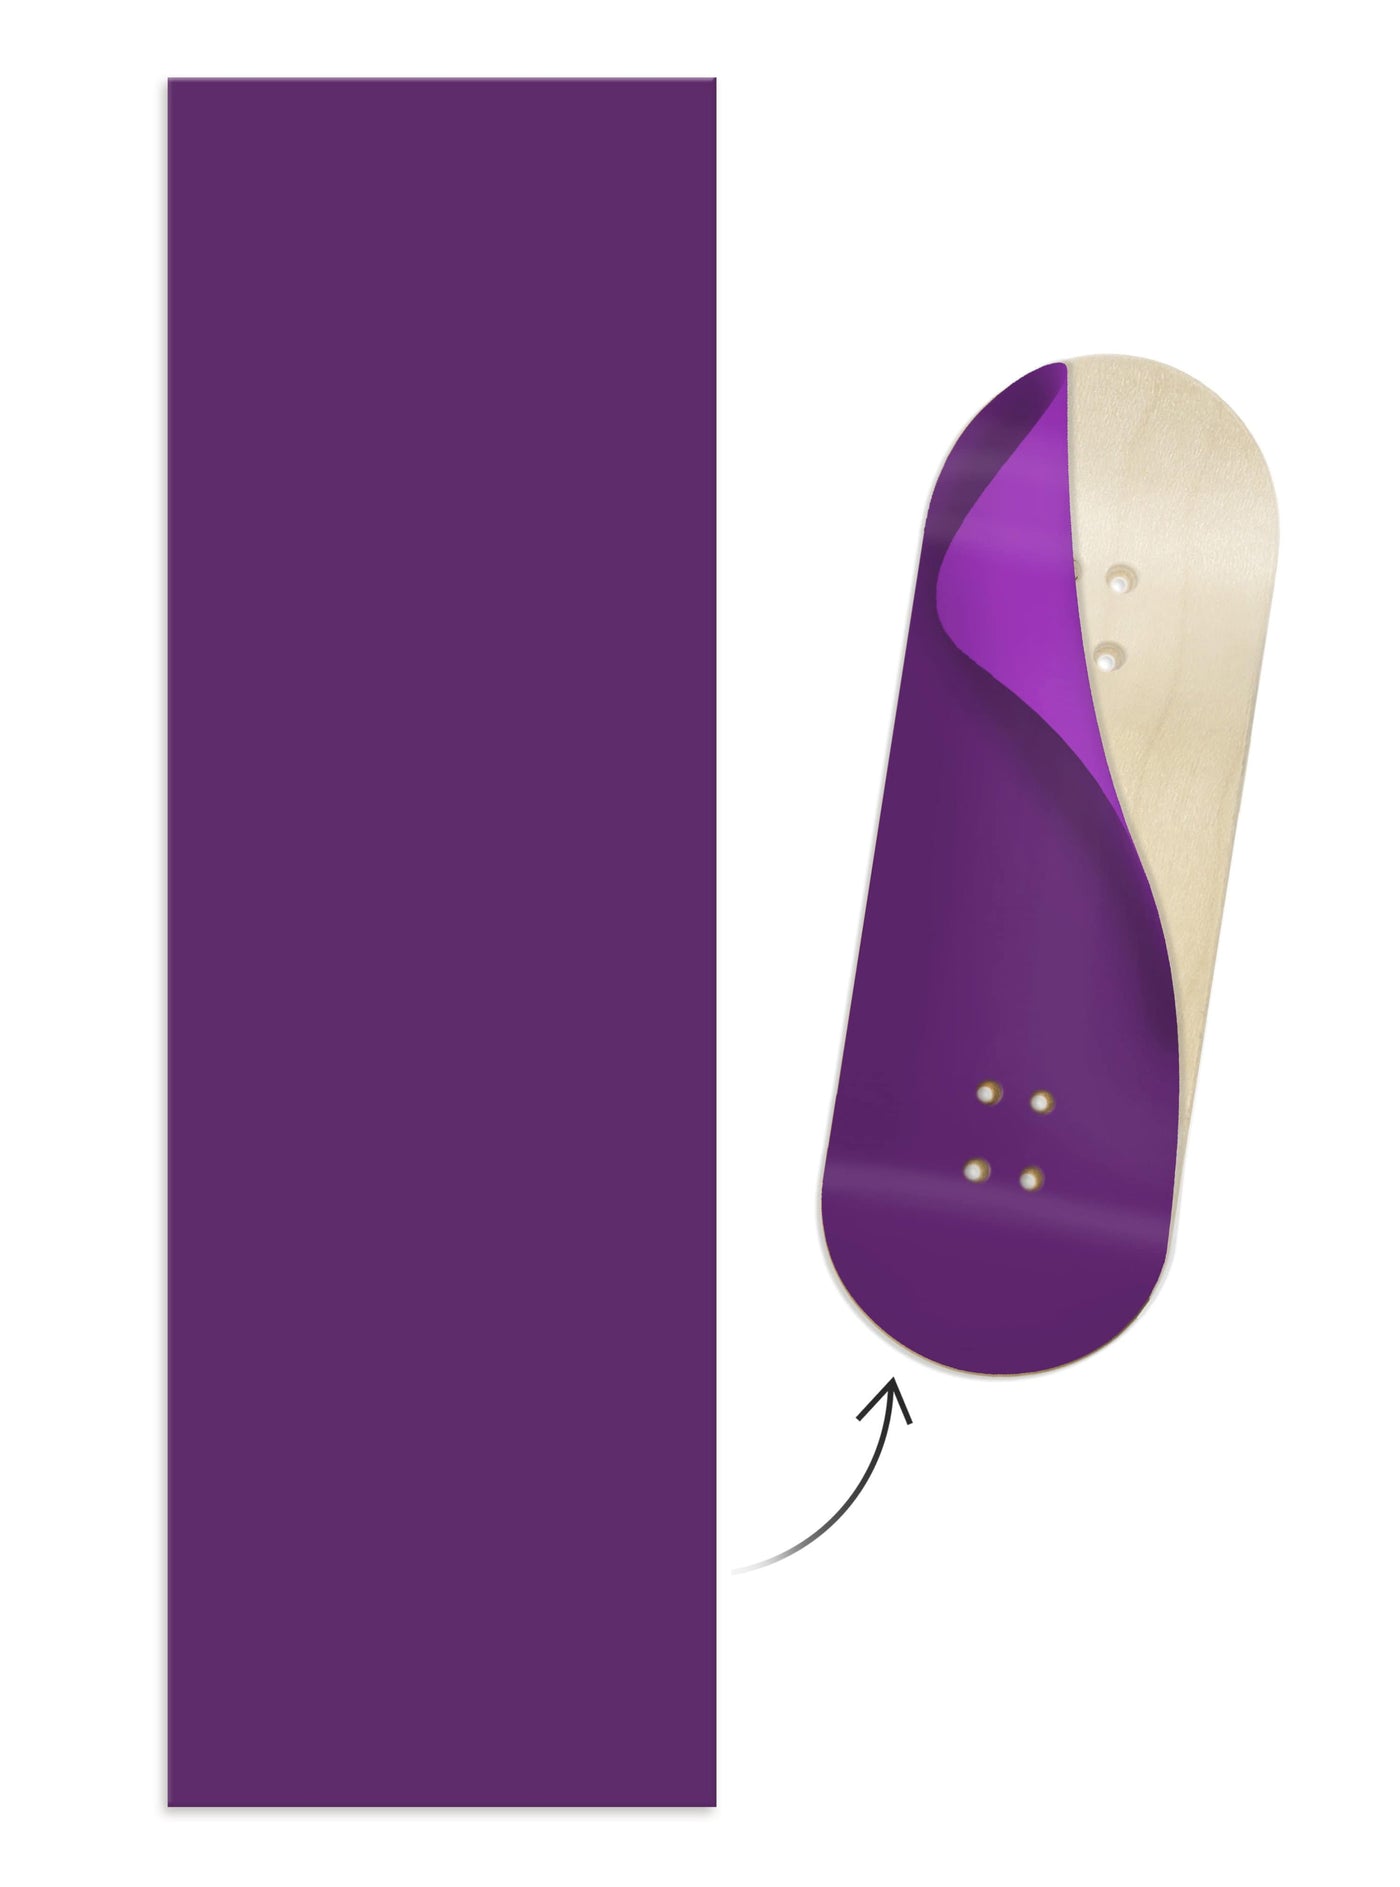 Teak Tuning "Purple Orchid Colorway" ColorBlock Fingerboard Deck Wrap - 35mm x 110mm